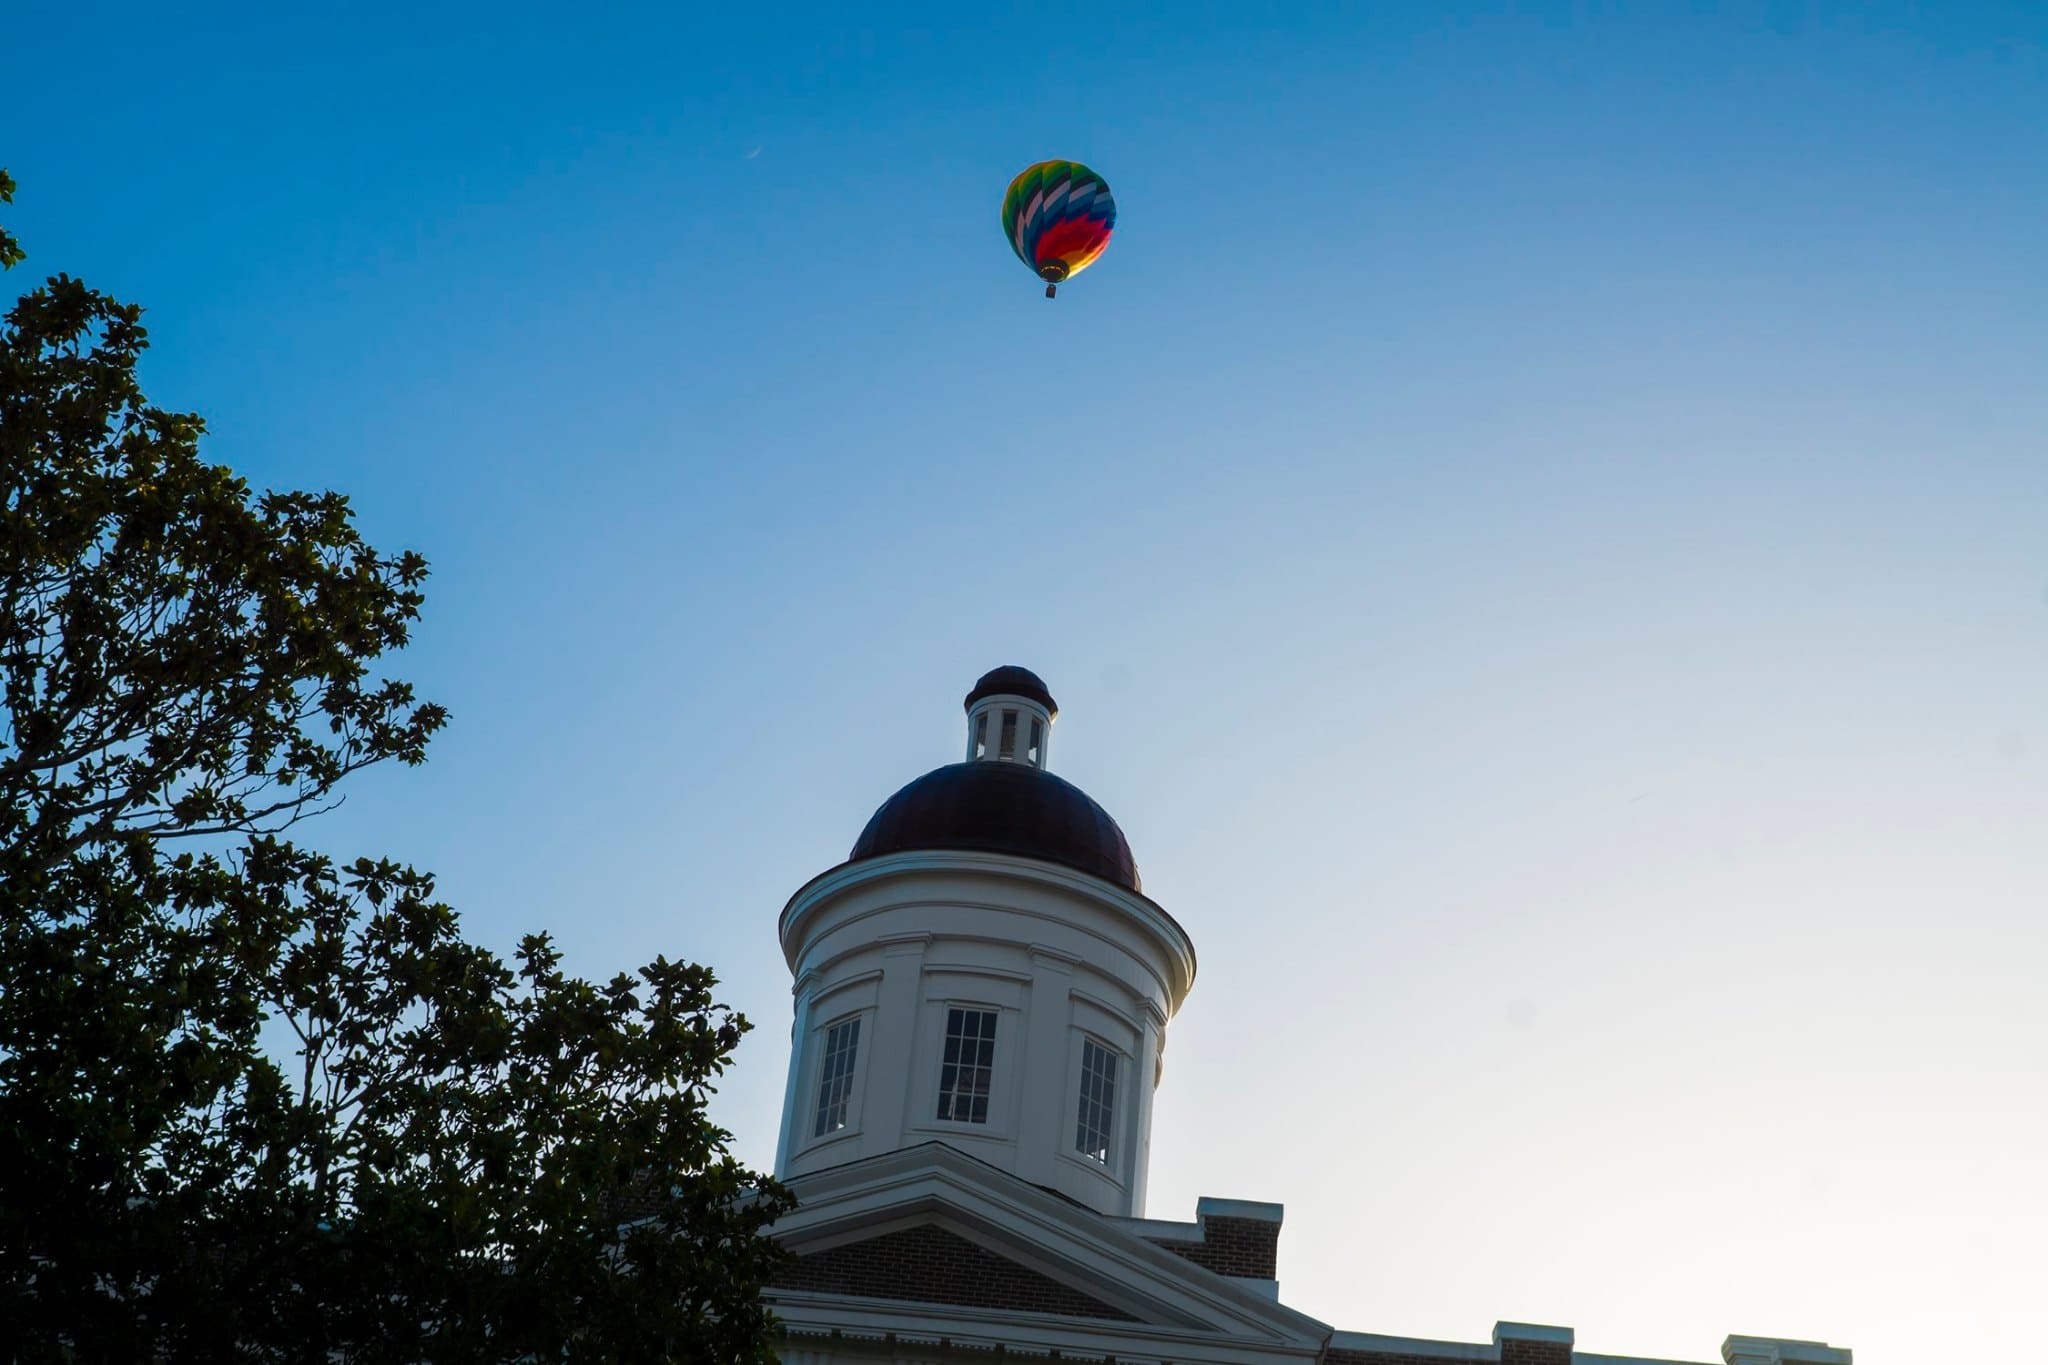 Canton's annual Championship Hot Air Balloon Fest begins this week